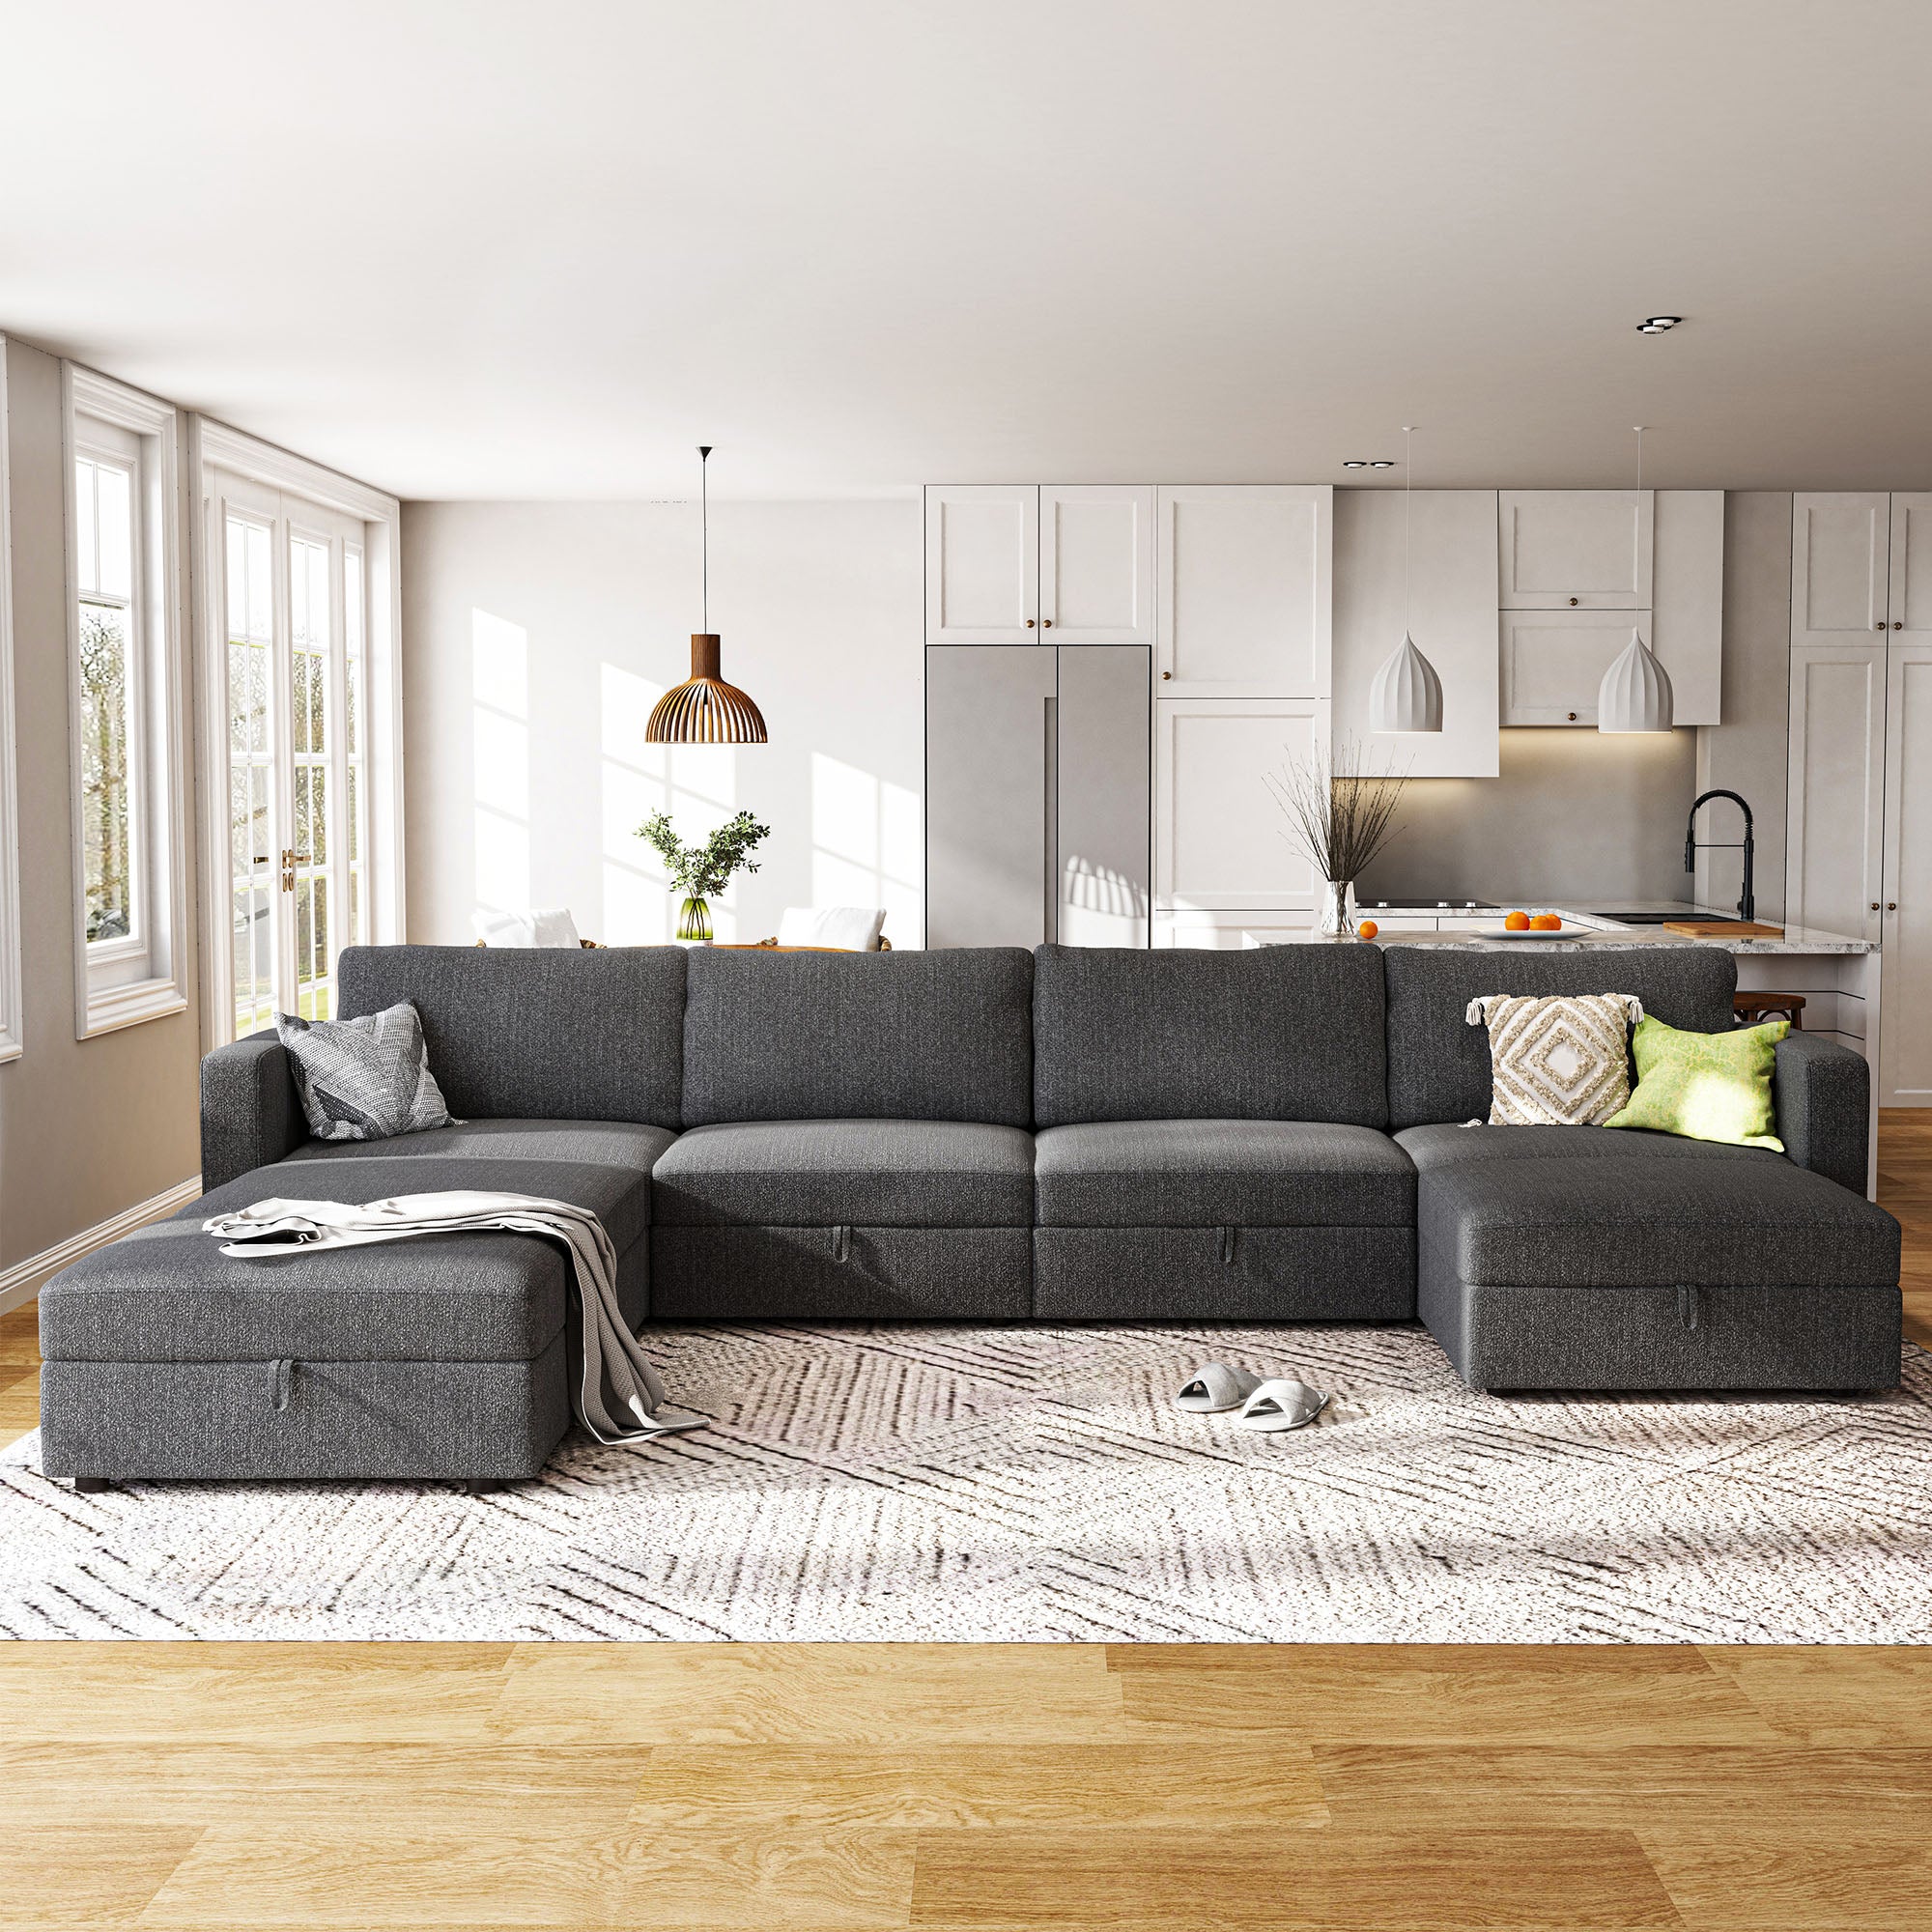 HONBAY Dark Grey Polyester Modular Sectional Sofa for Living Room